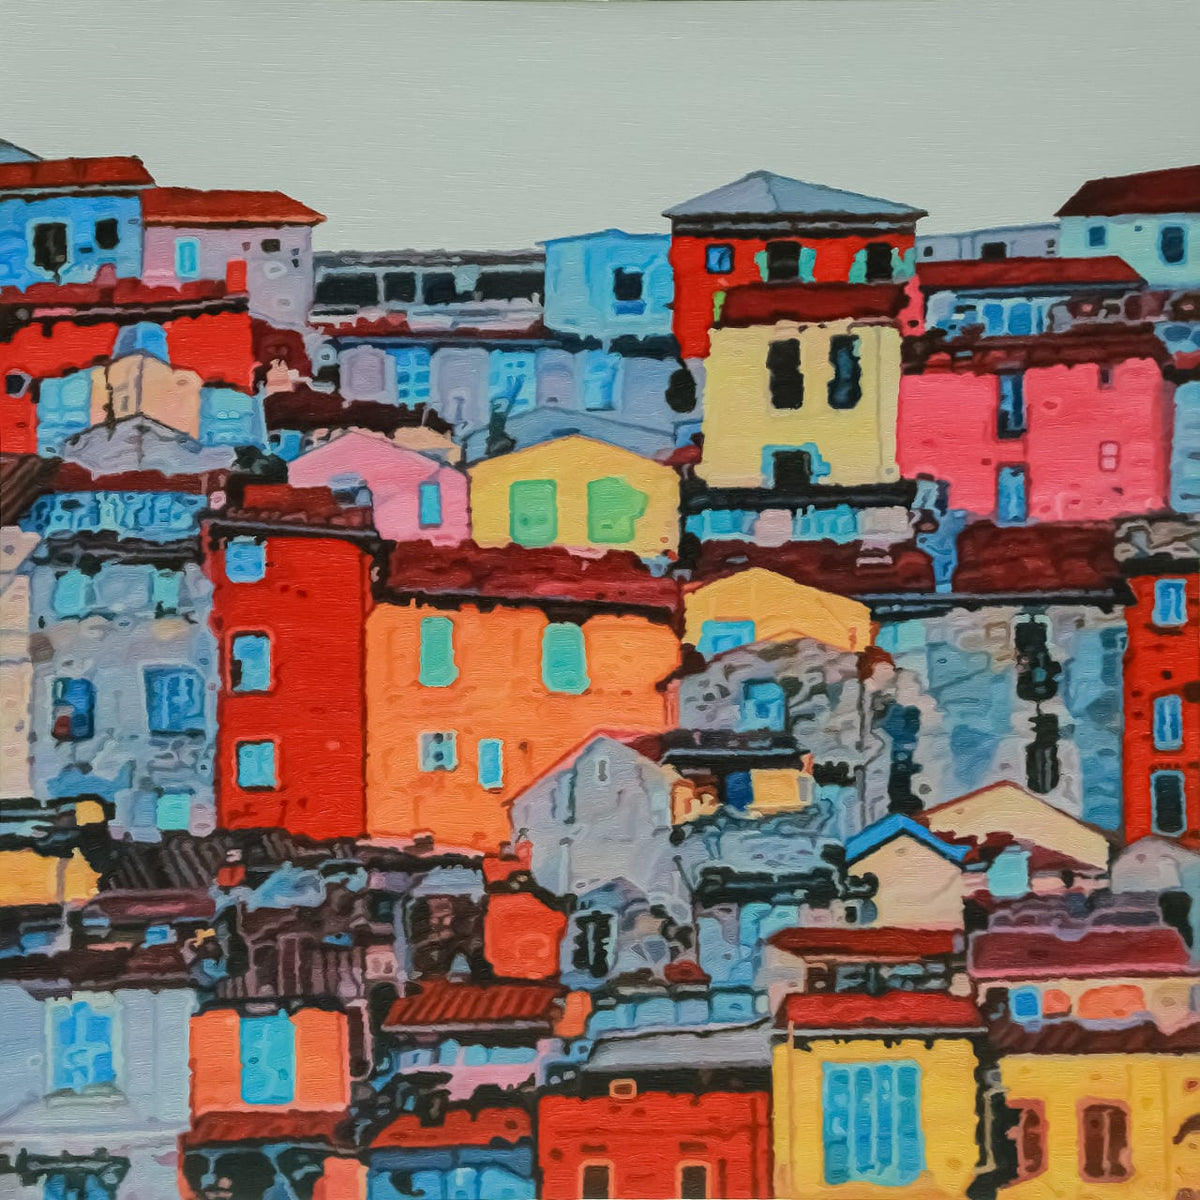 Ganesh Pokharkar's artwork captures the enchanting cityscape of a European town cascading down a hill